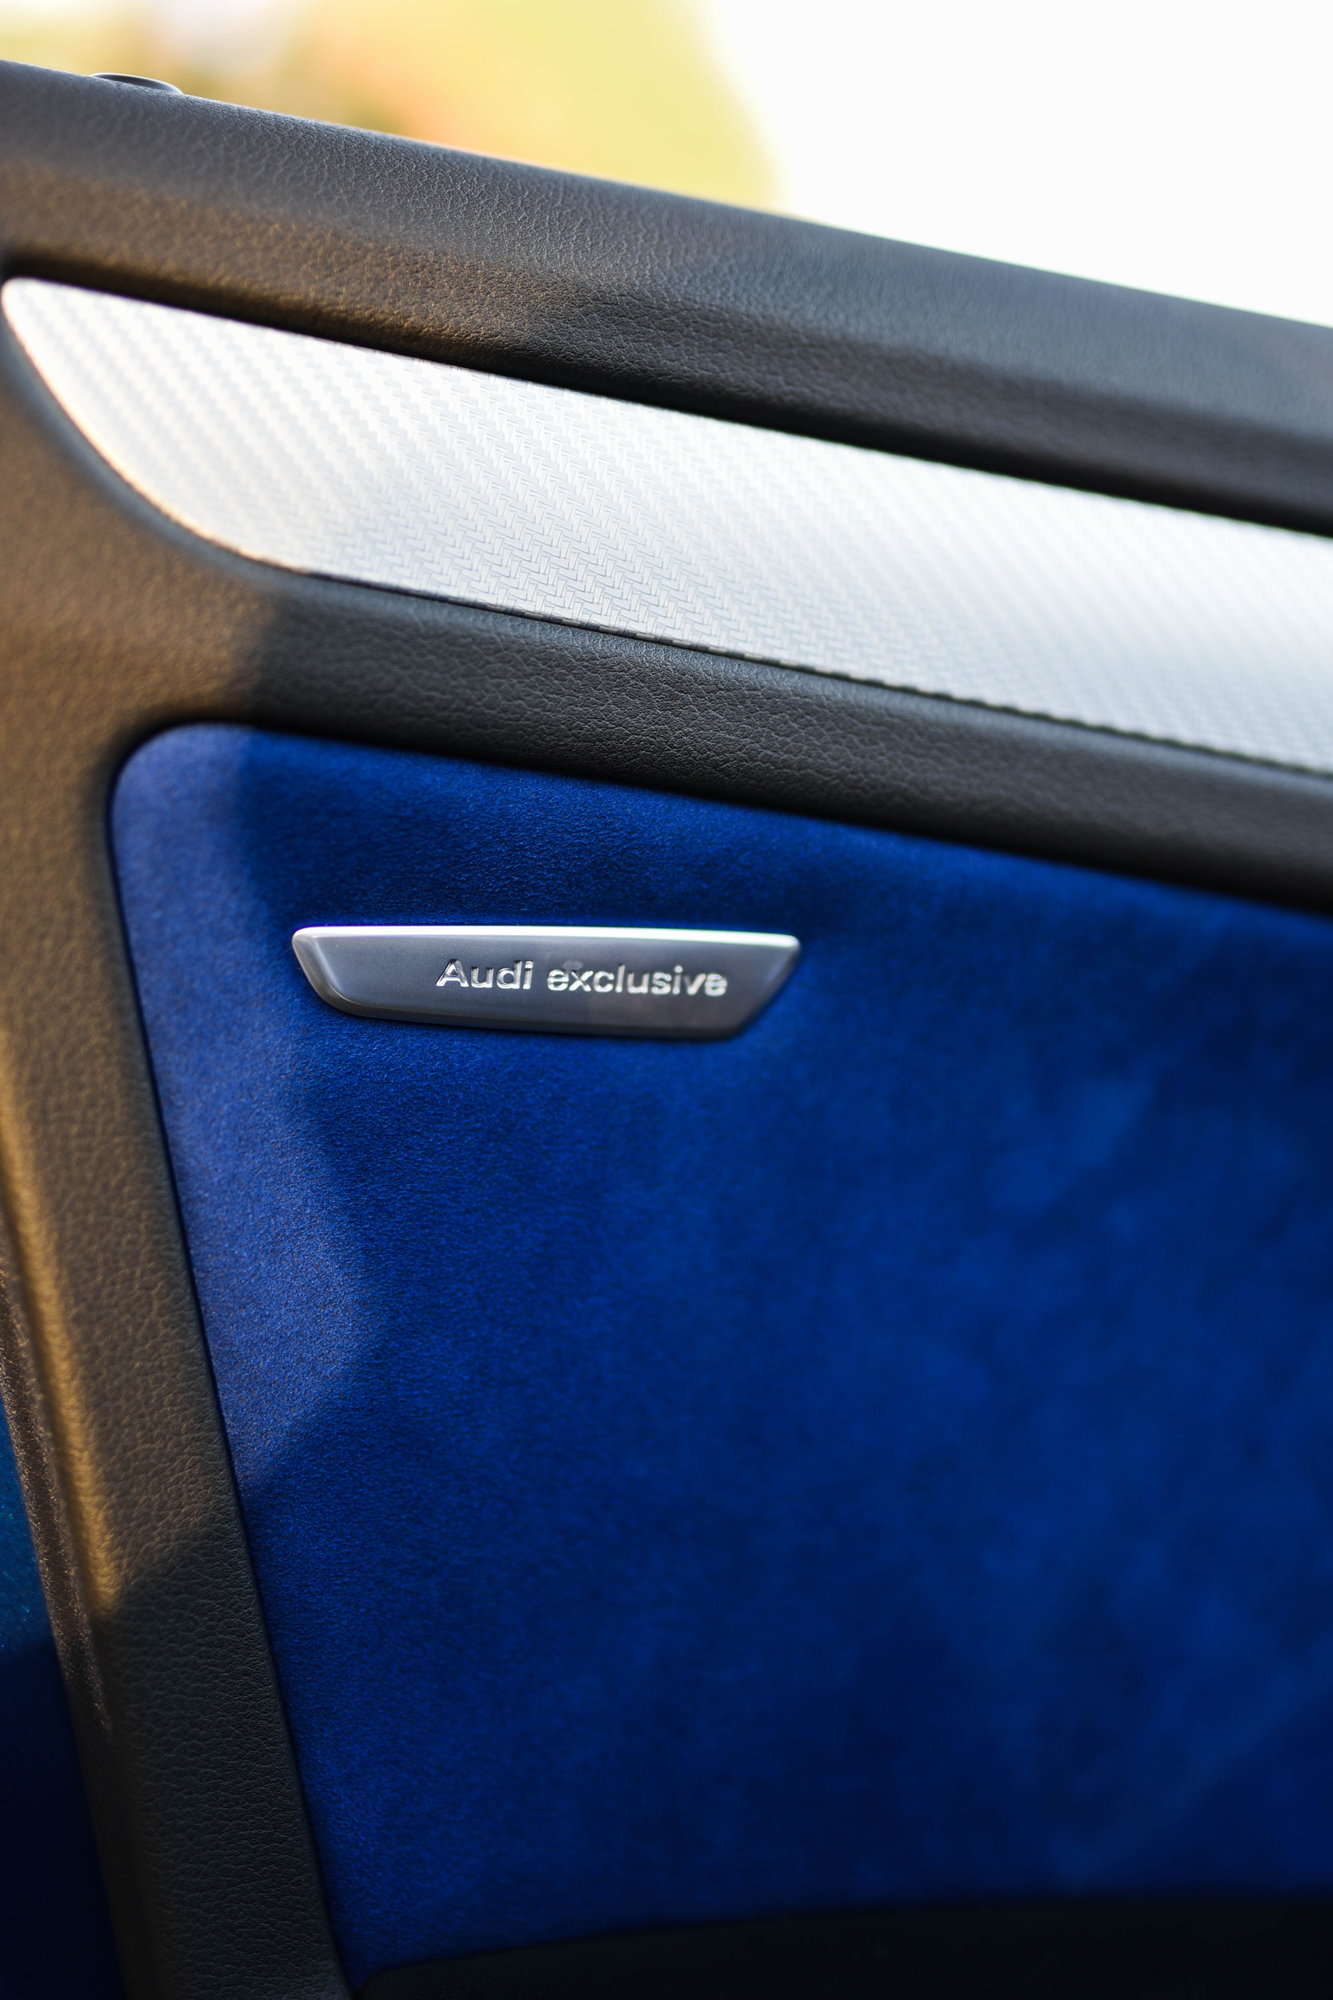 2015 Audi S4 - VERY RARE 2015 Audi S4 Prestige Sepang Blue Pearl/Audi Exclusive Nogaro Blue Suede - Used - VIN WAUKGAFL8FA078876 - 53,000 Miles - 6 cyl - 4WD - Automatic - Sedan - Blue - Keene, NH 03431, United States